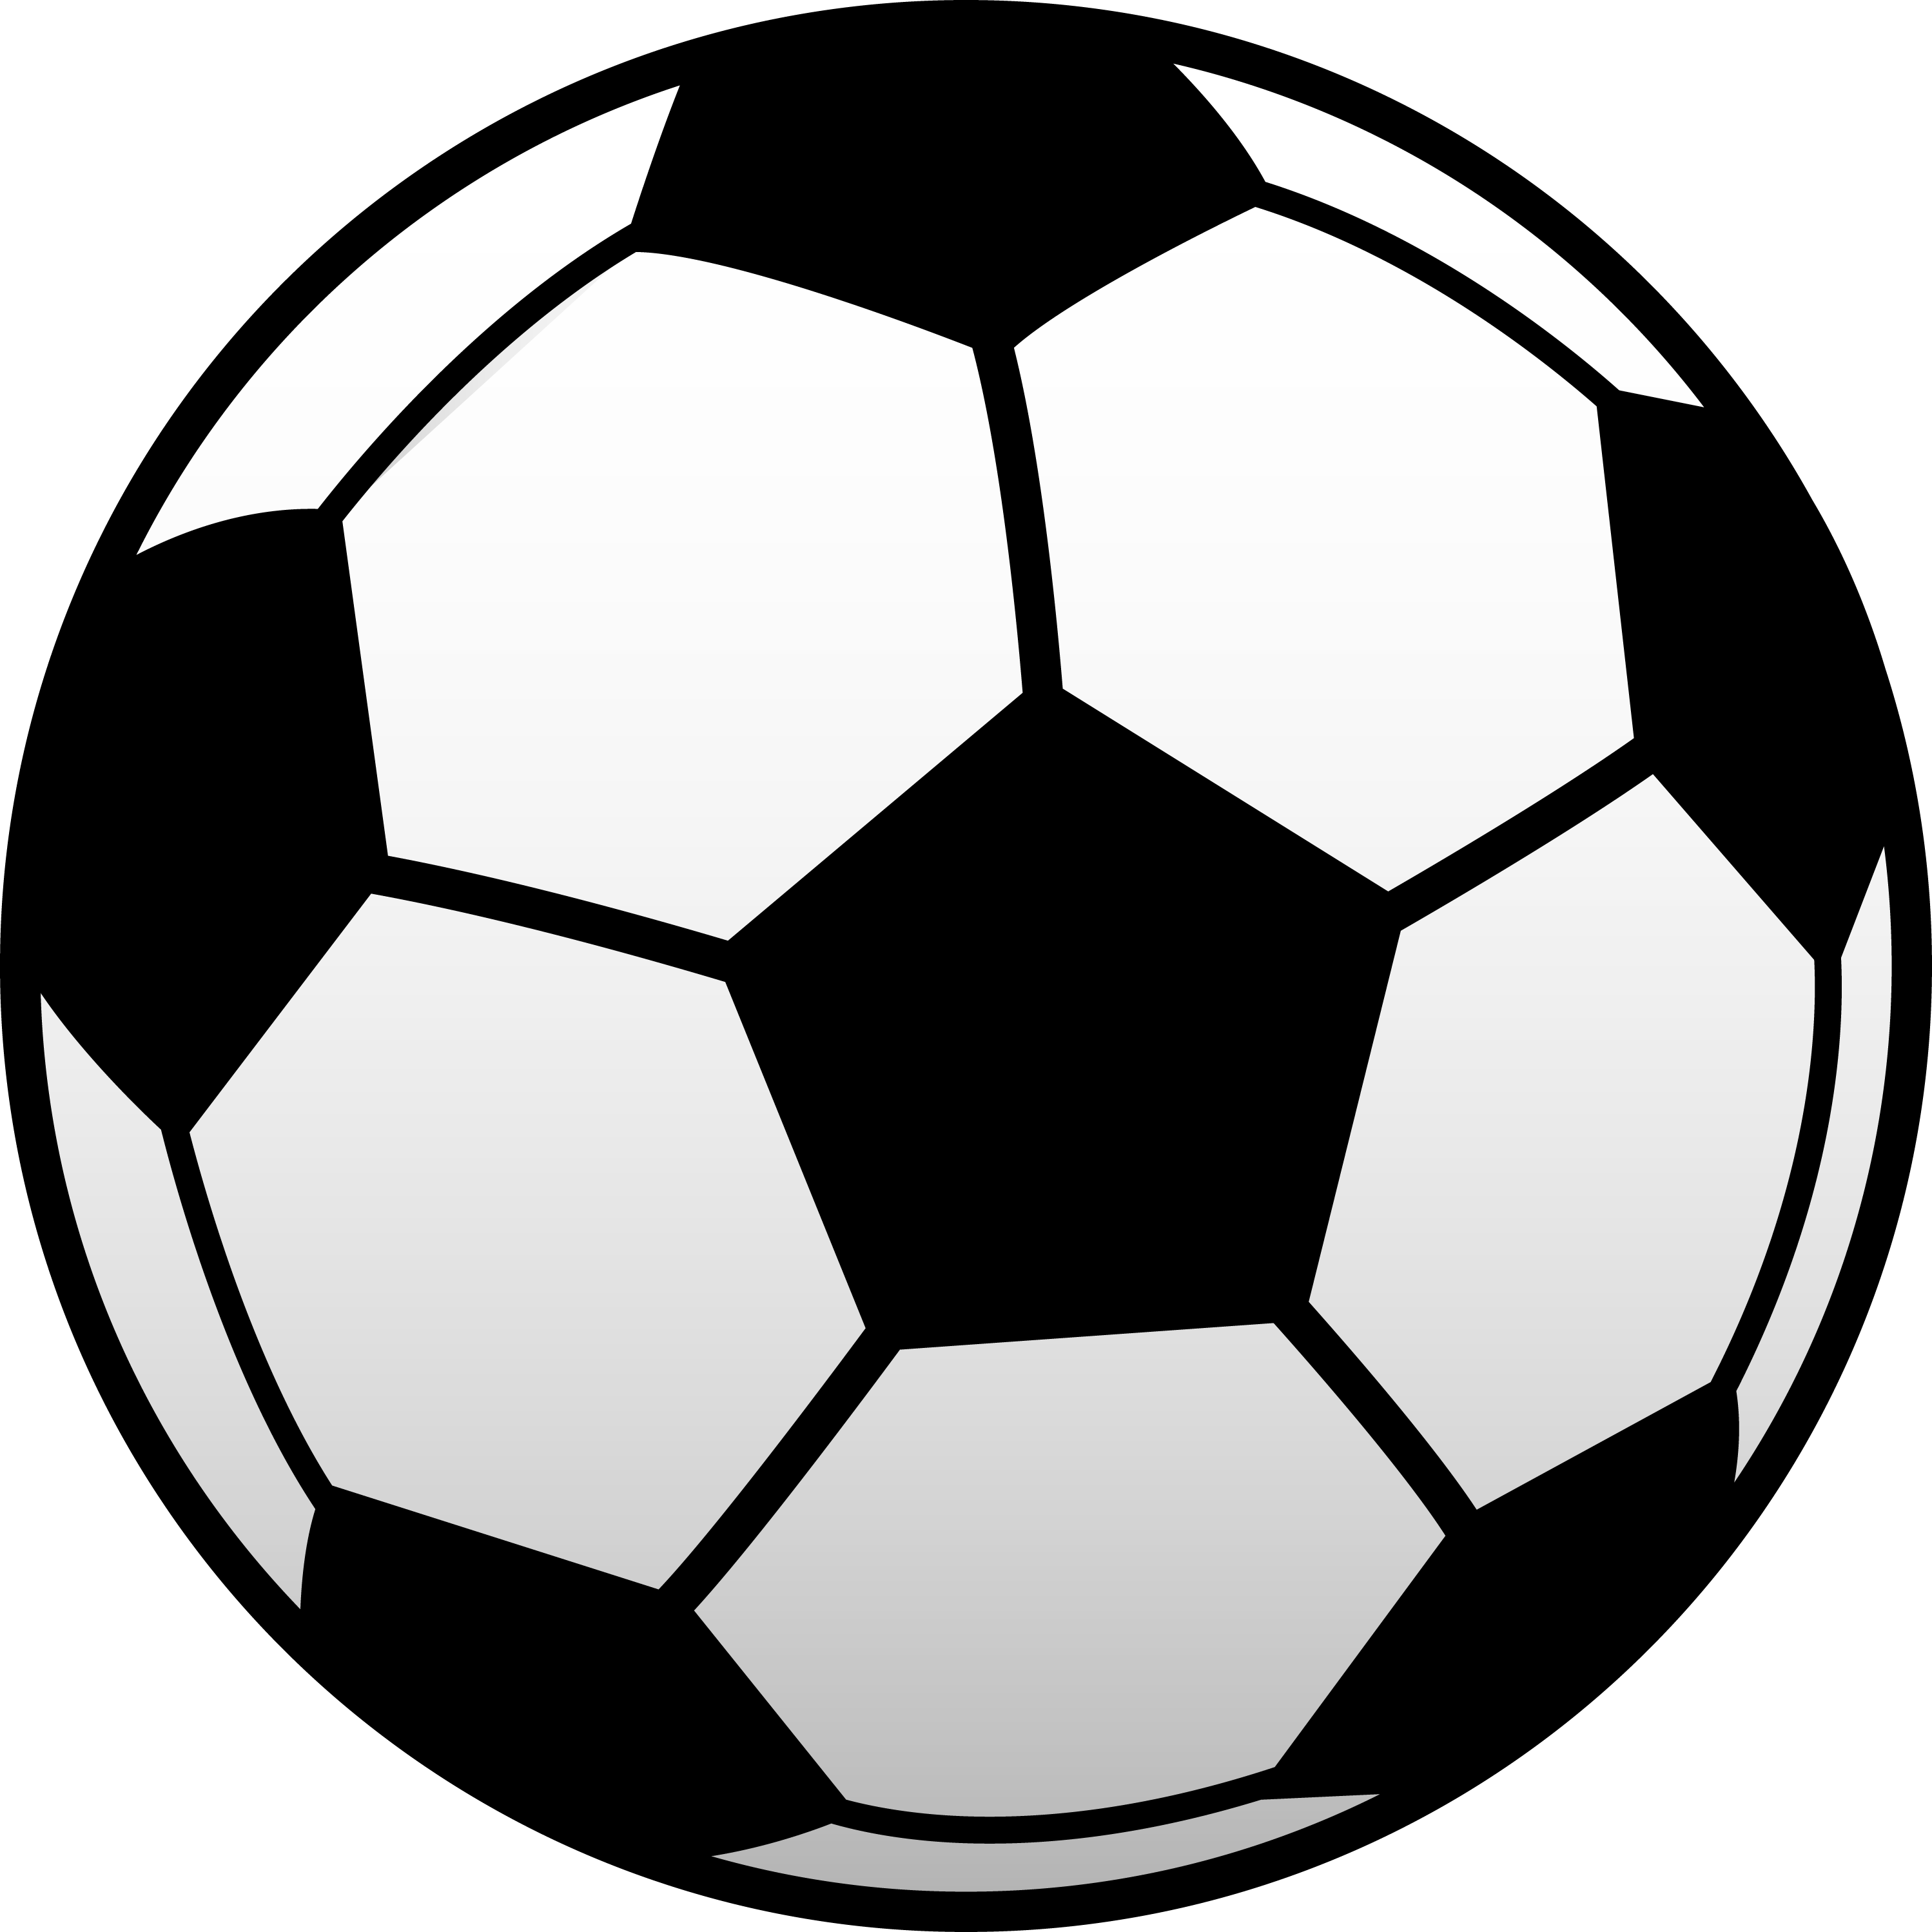 Soccer Ball or Foot Ball - Free Clip Art